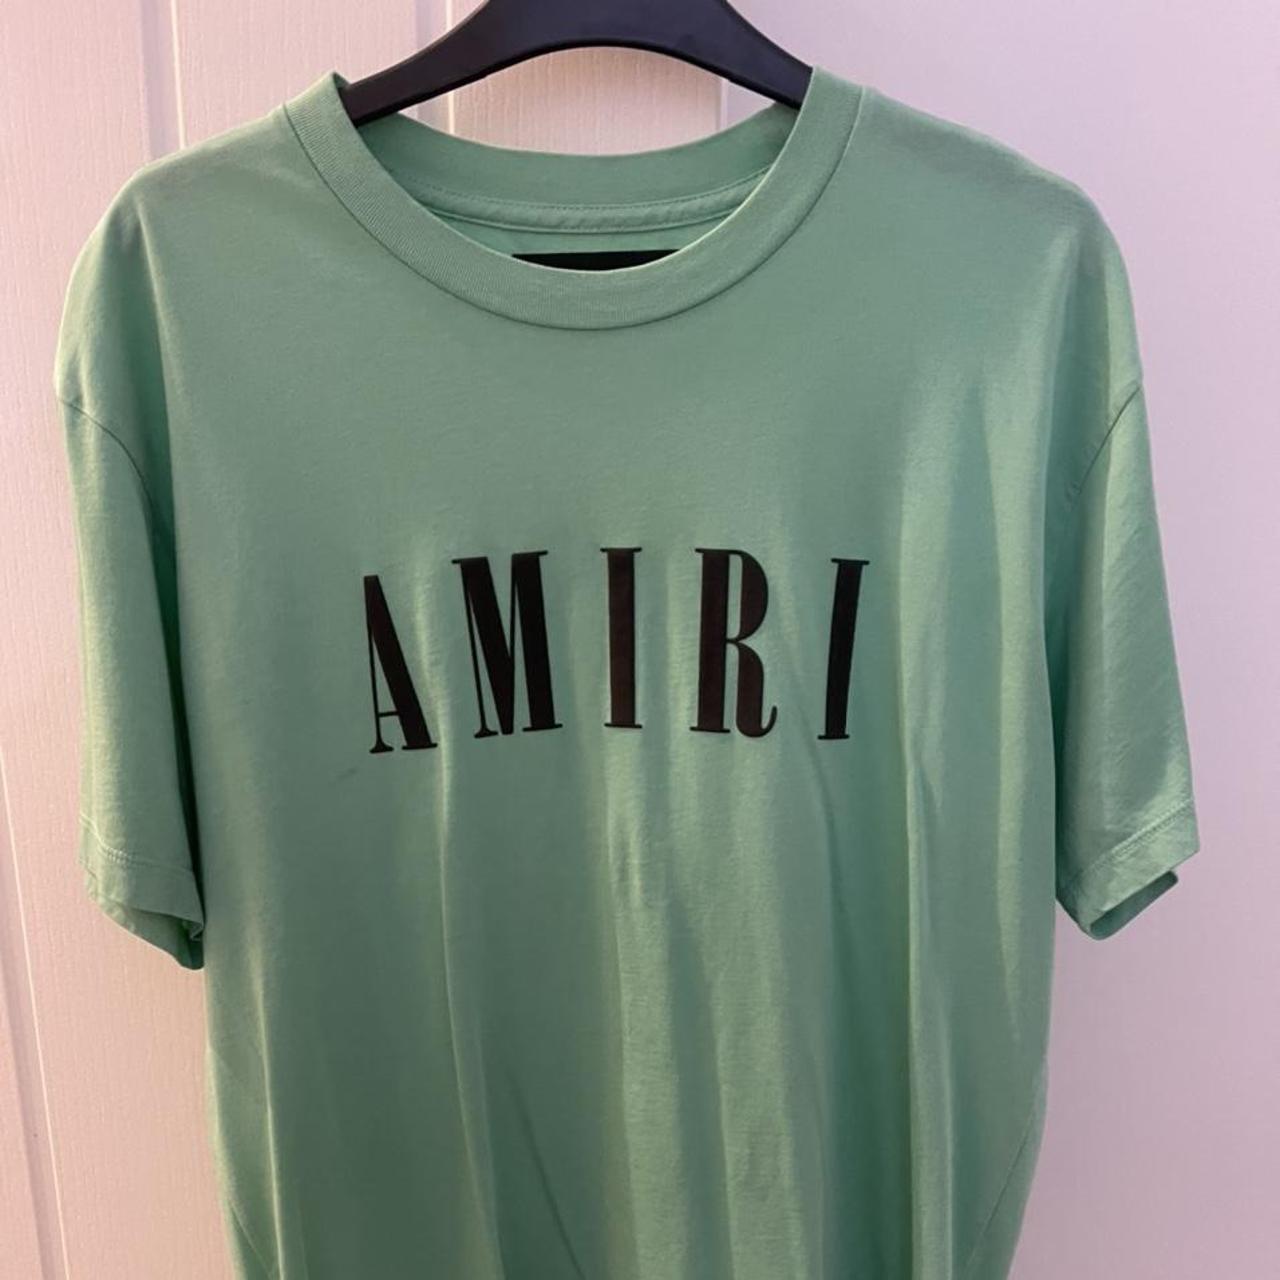 AMIRI, Shirts, Amiri Core Logo Tee Size Medium Black Red New With Tags